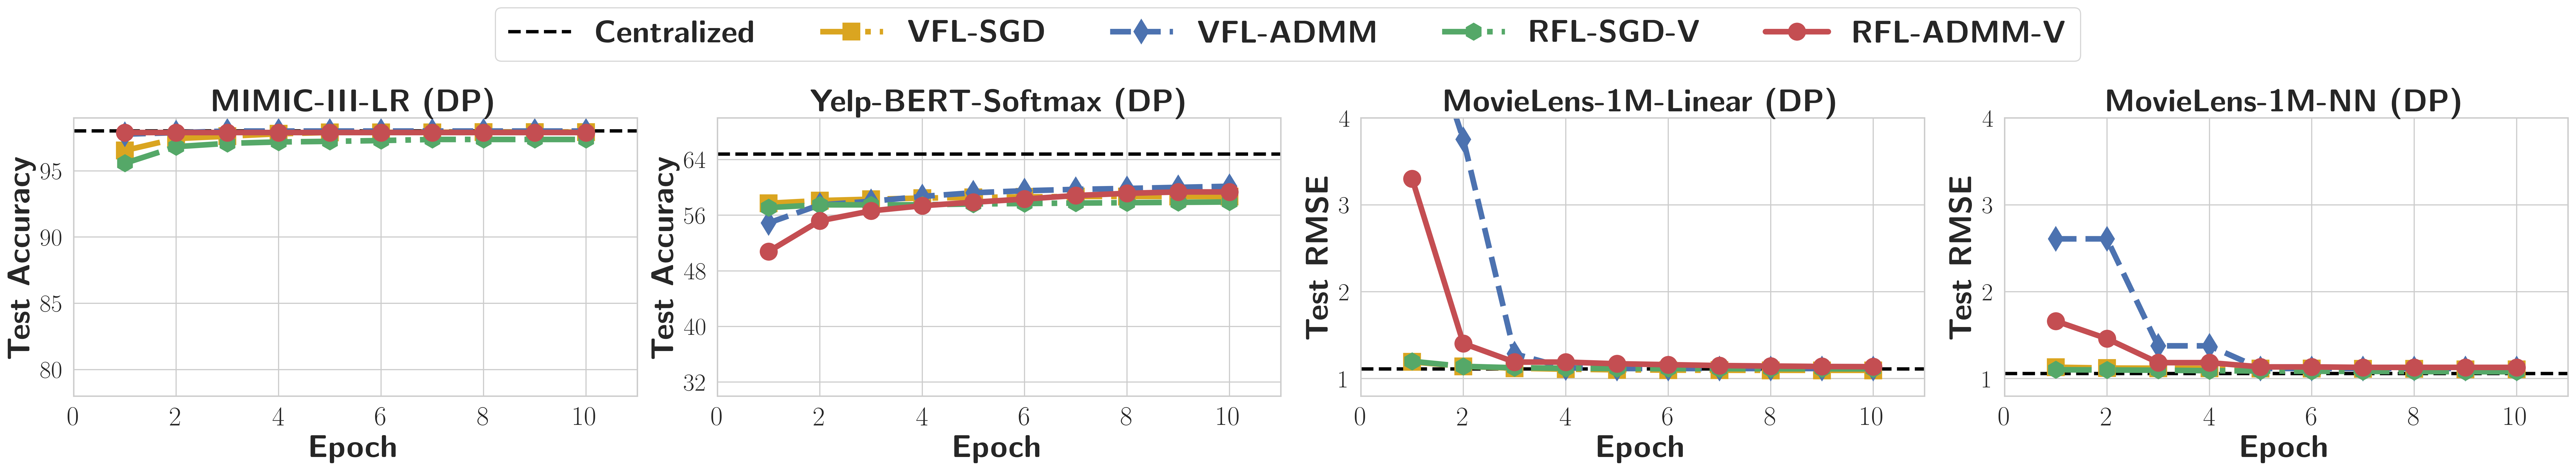 convergence_rates_VFL(DP)